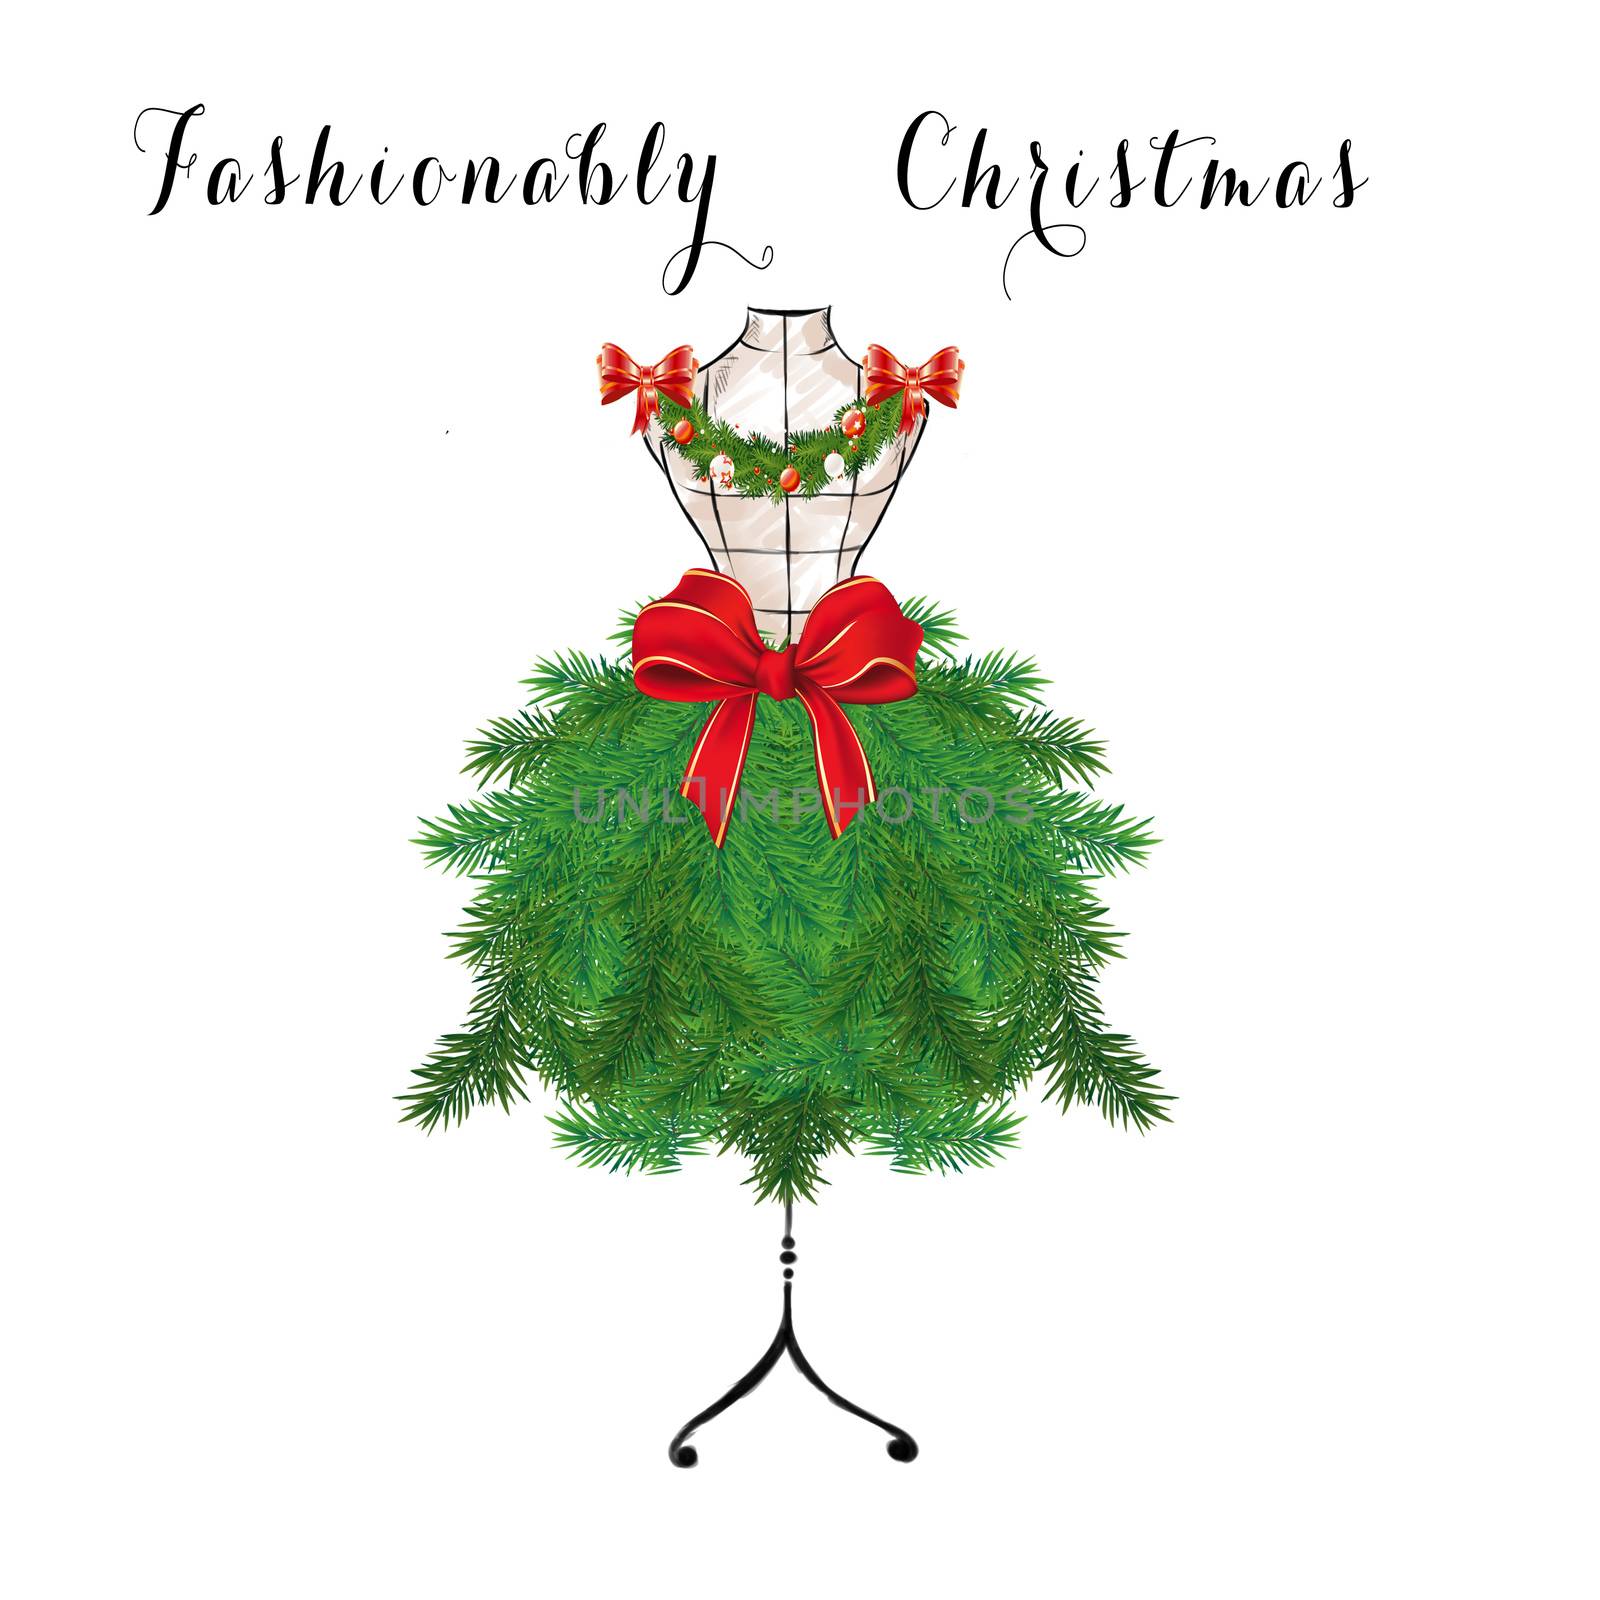 Seasonal Fashion Illustration - Christmas tree on a mannequin by GGillustrations